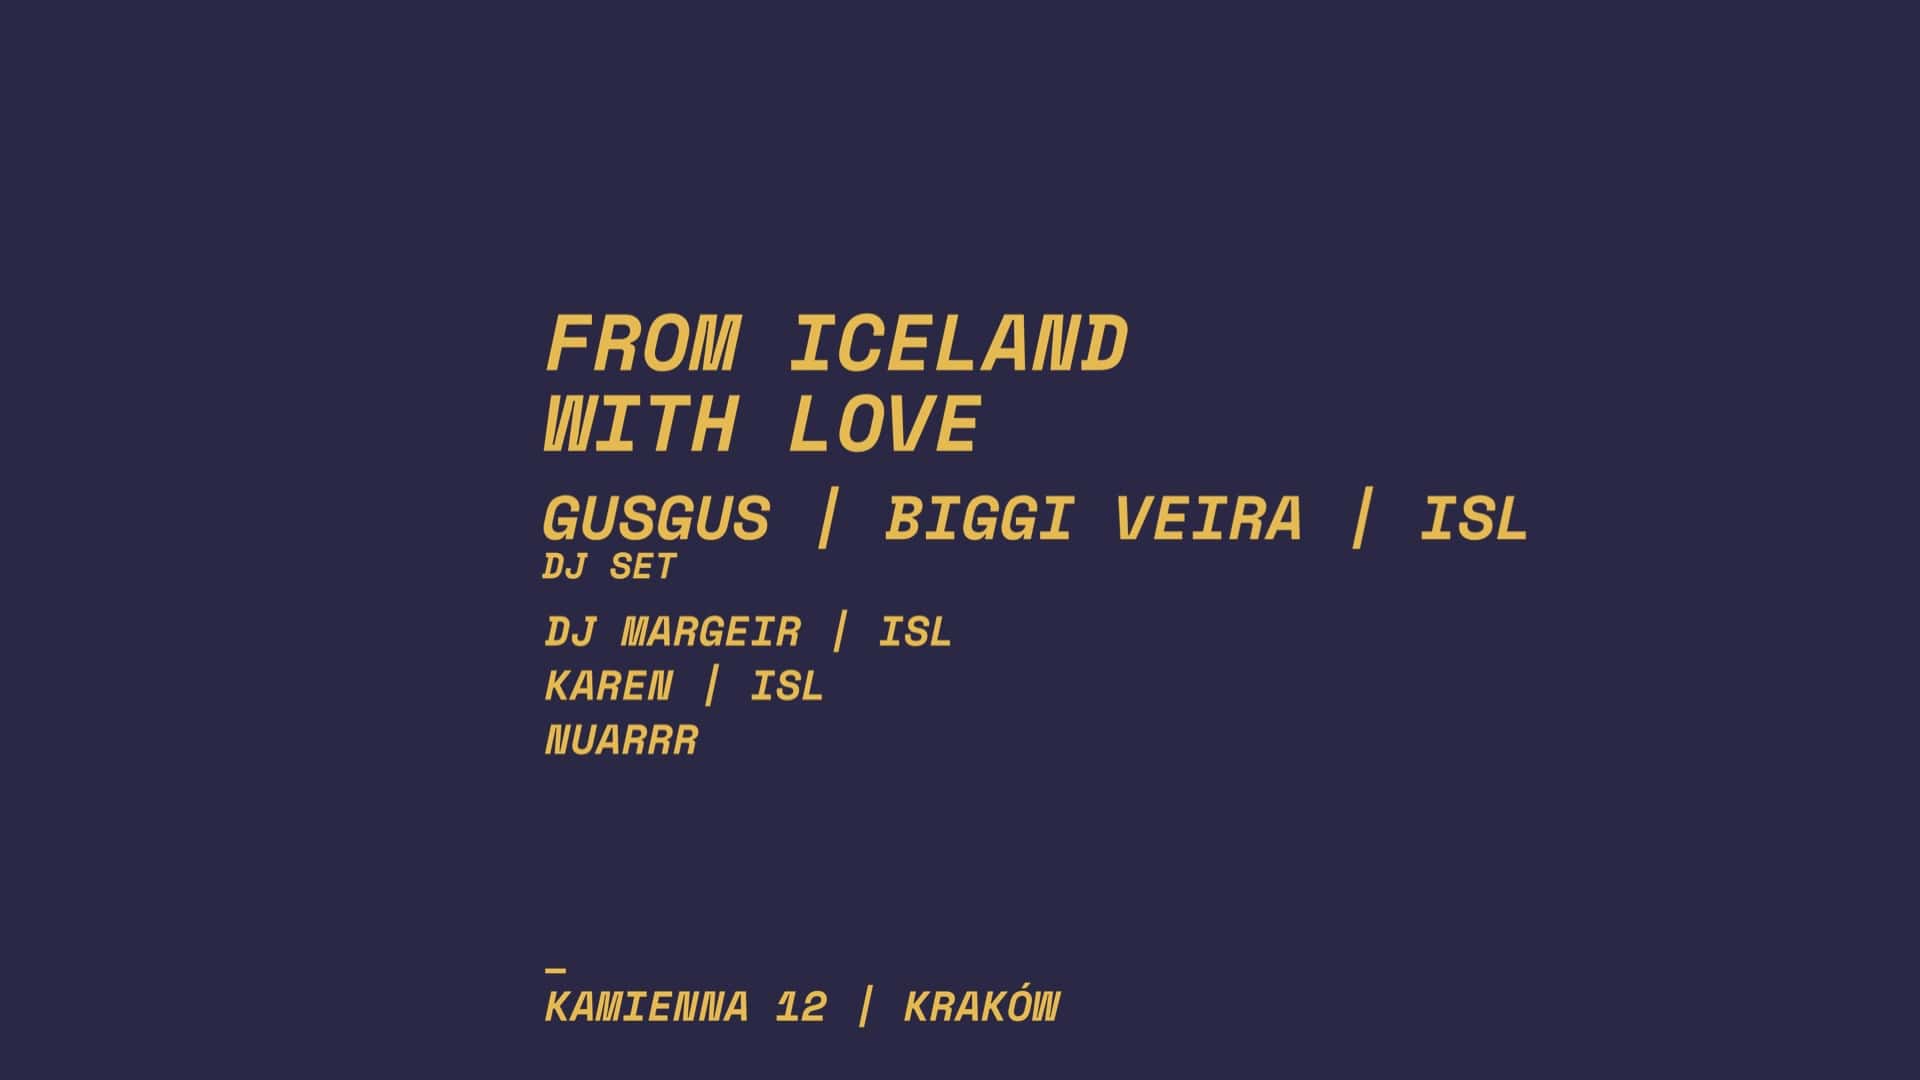 FROM ICELAND WITH LOVE | GUSGUS DJ SET + DJ MARGEIR, KAREN, NUARRR